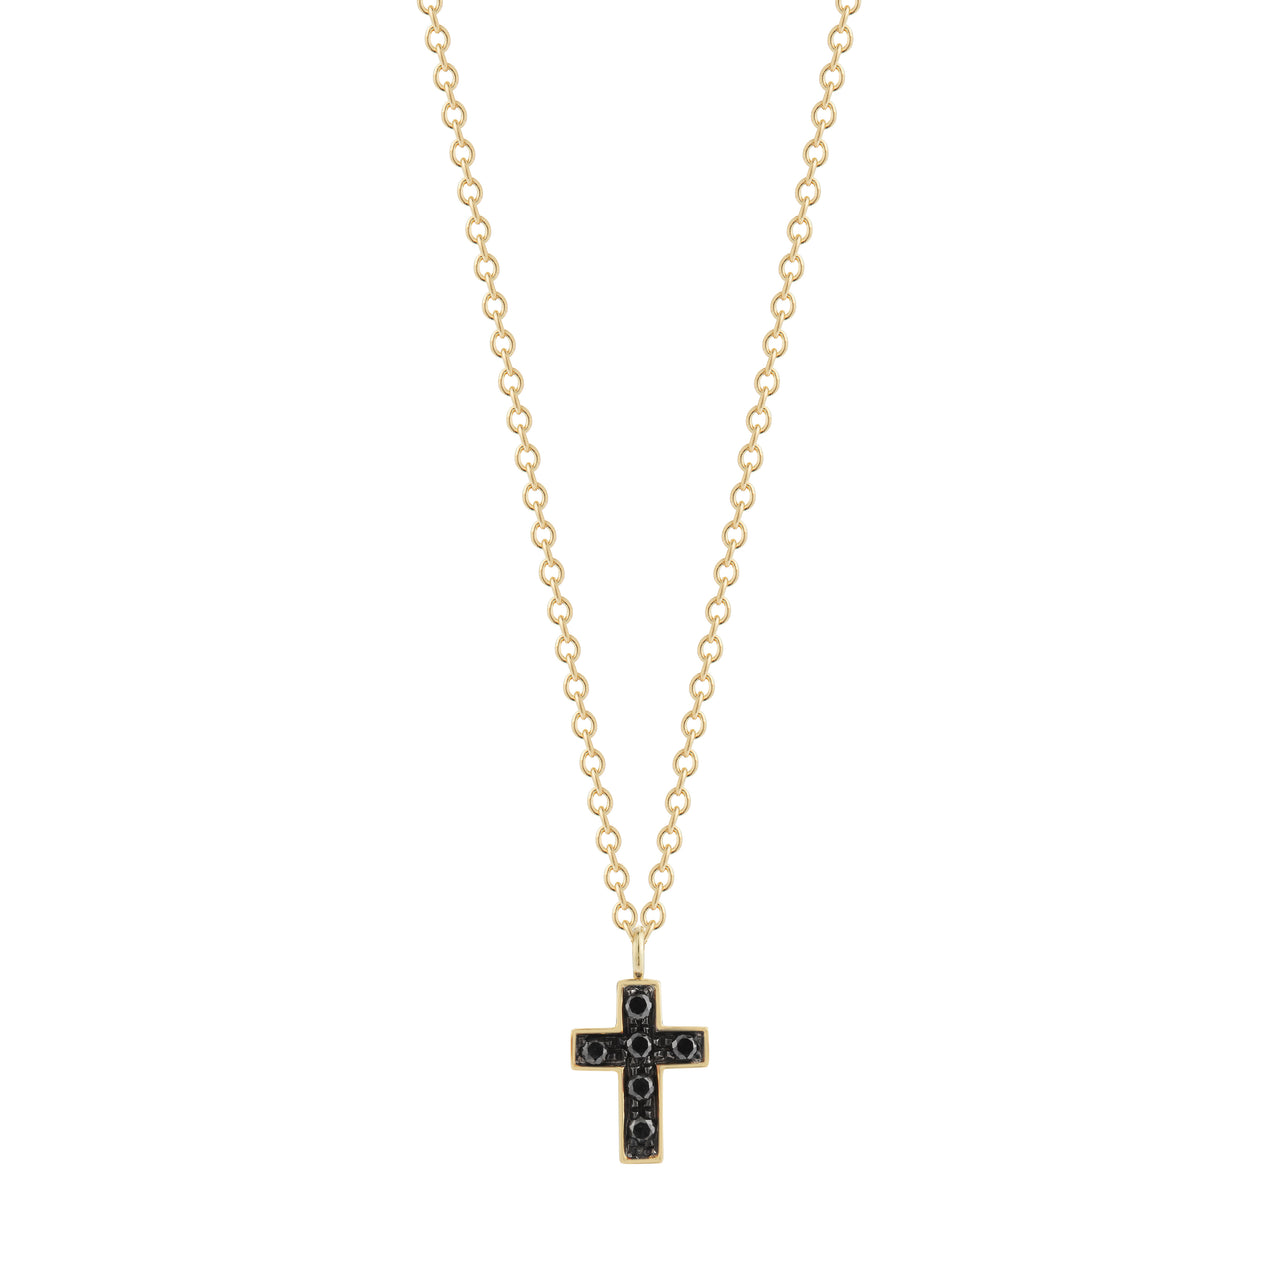 18k everyday gold black diamond cross necklace by finn by candice pool neistat